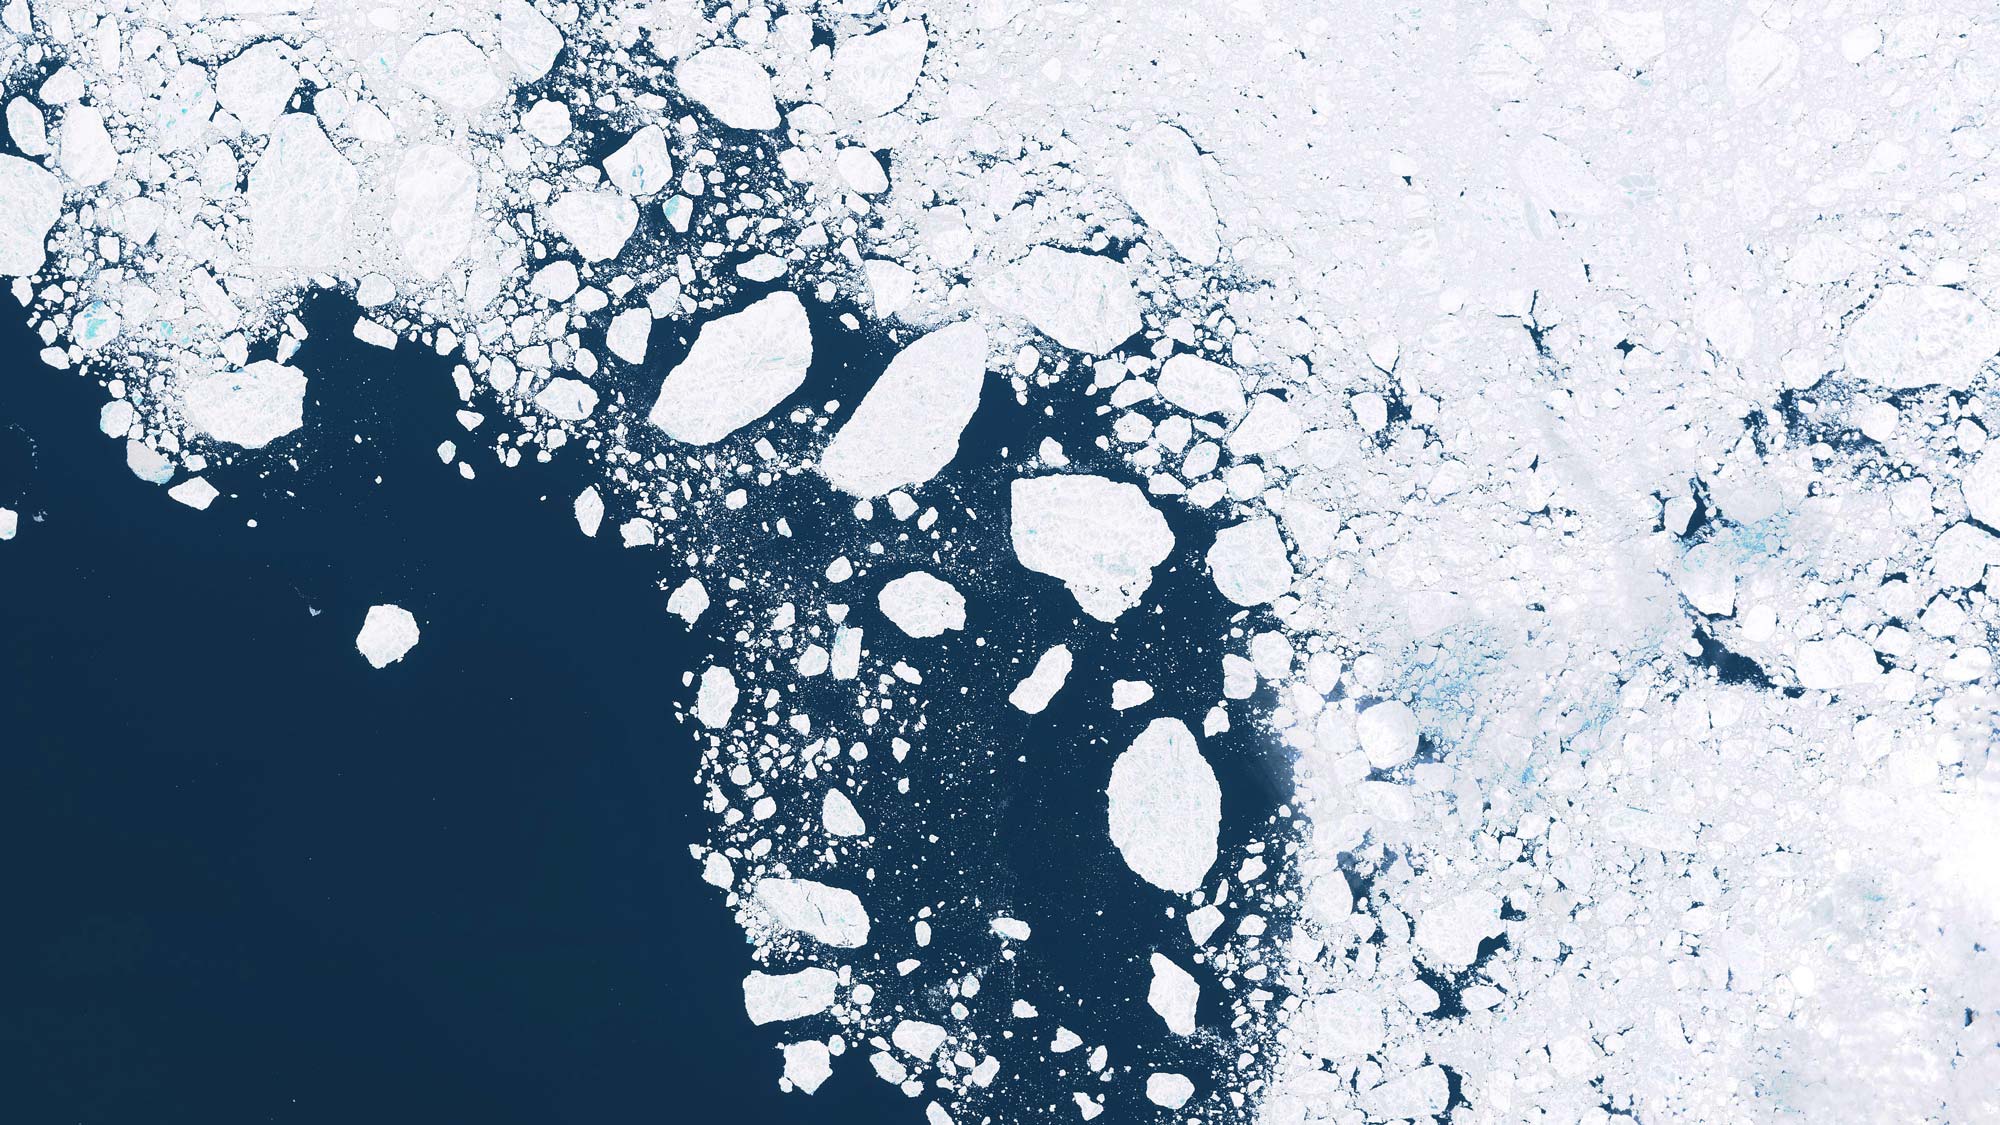 Revealing the fractured ice of Antarctica’s “Doomsday Glacier”